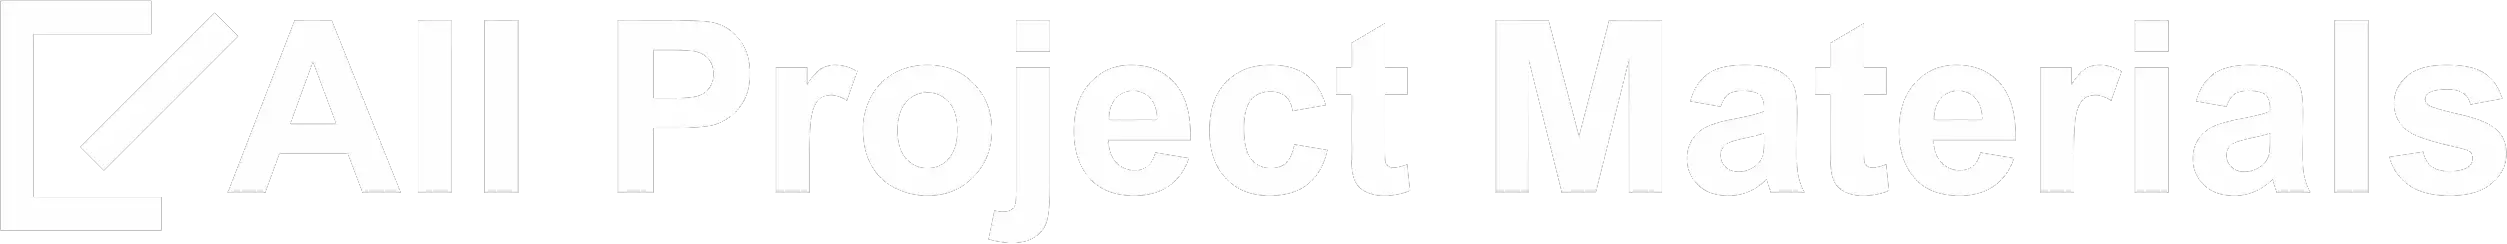 All Project Materials logo